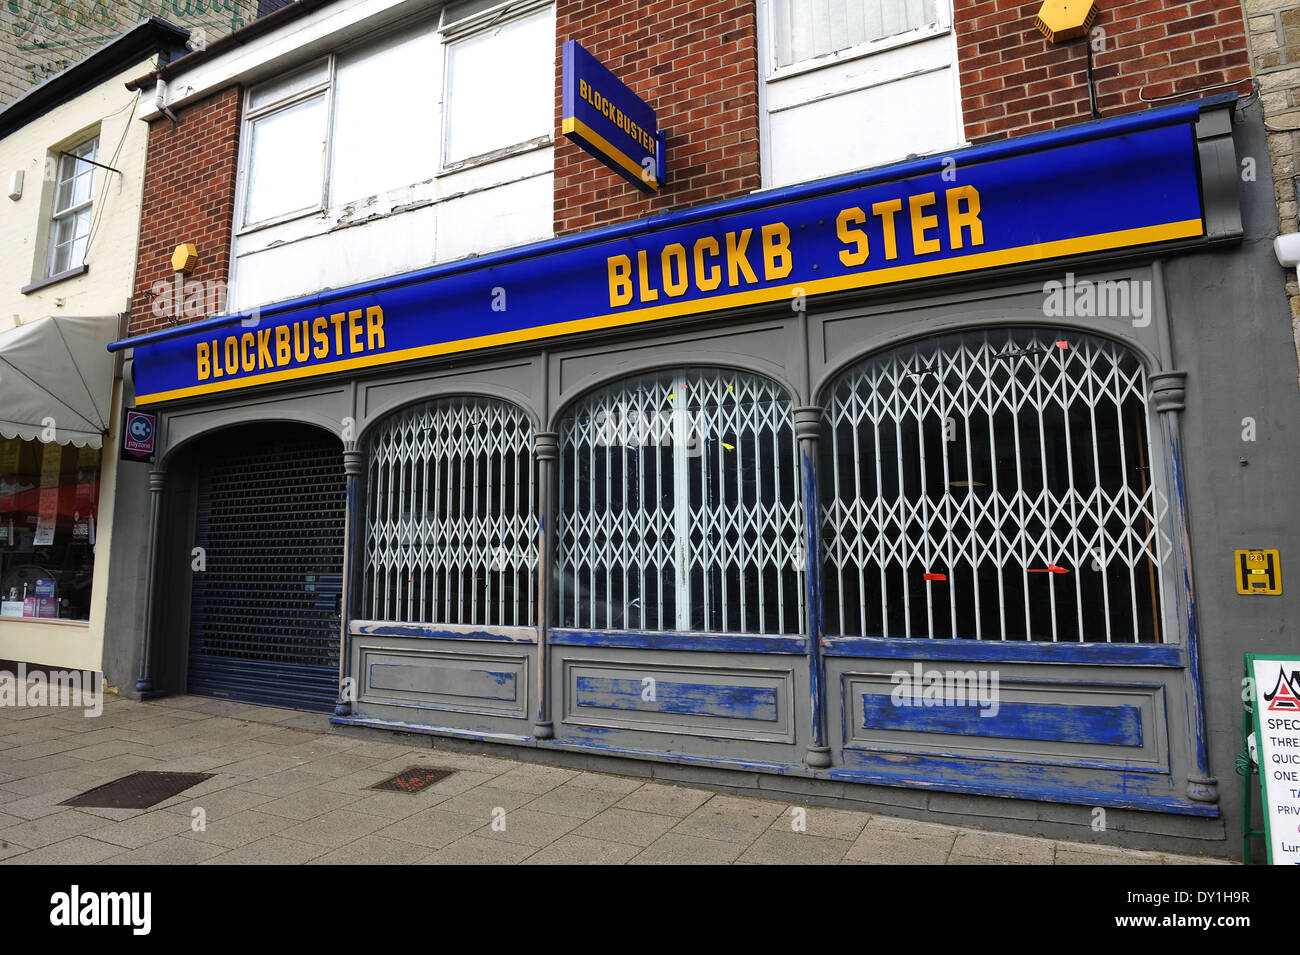 Blockbuster video shop, closed down, UK Stock Photo